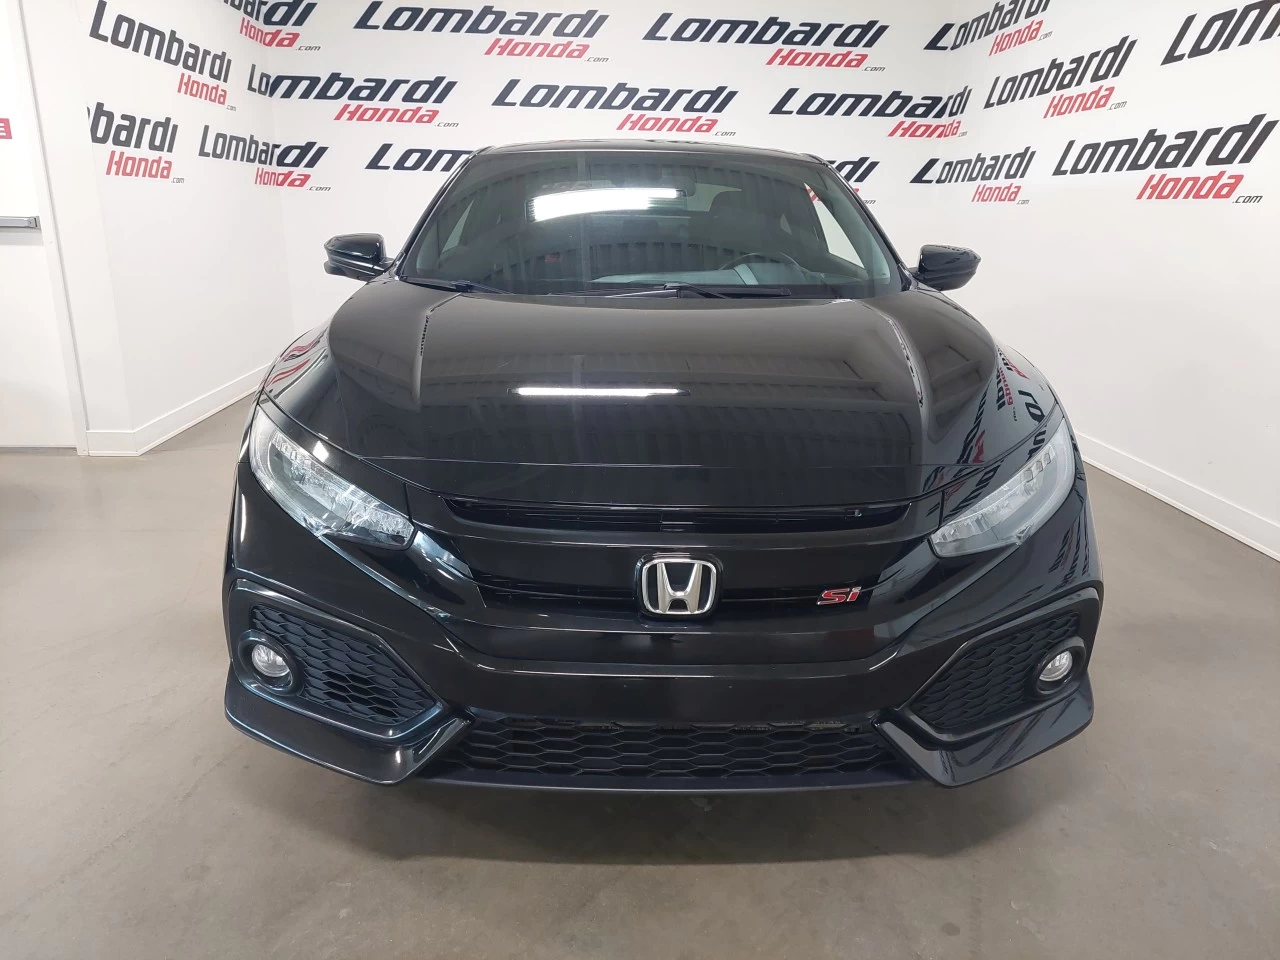 2019 Honda Civic SI COUPE https://www.lombardihonda.com/resize/b990ff35b810a3abc0cc817b2ca24889-1